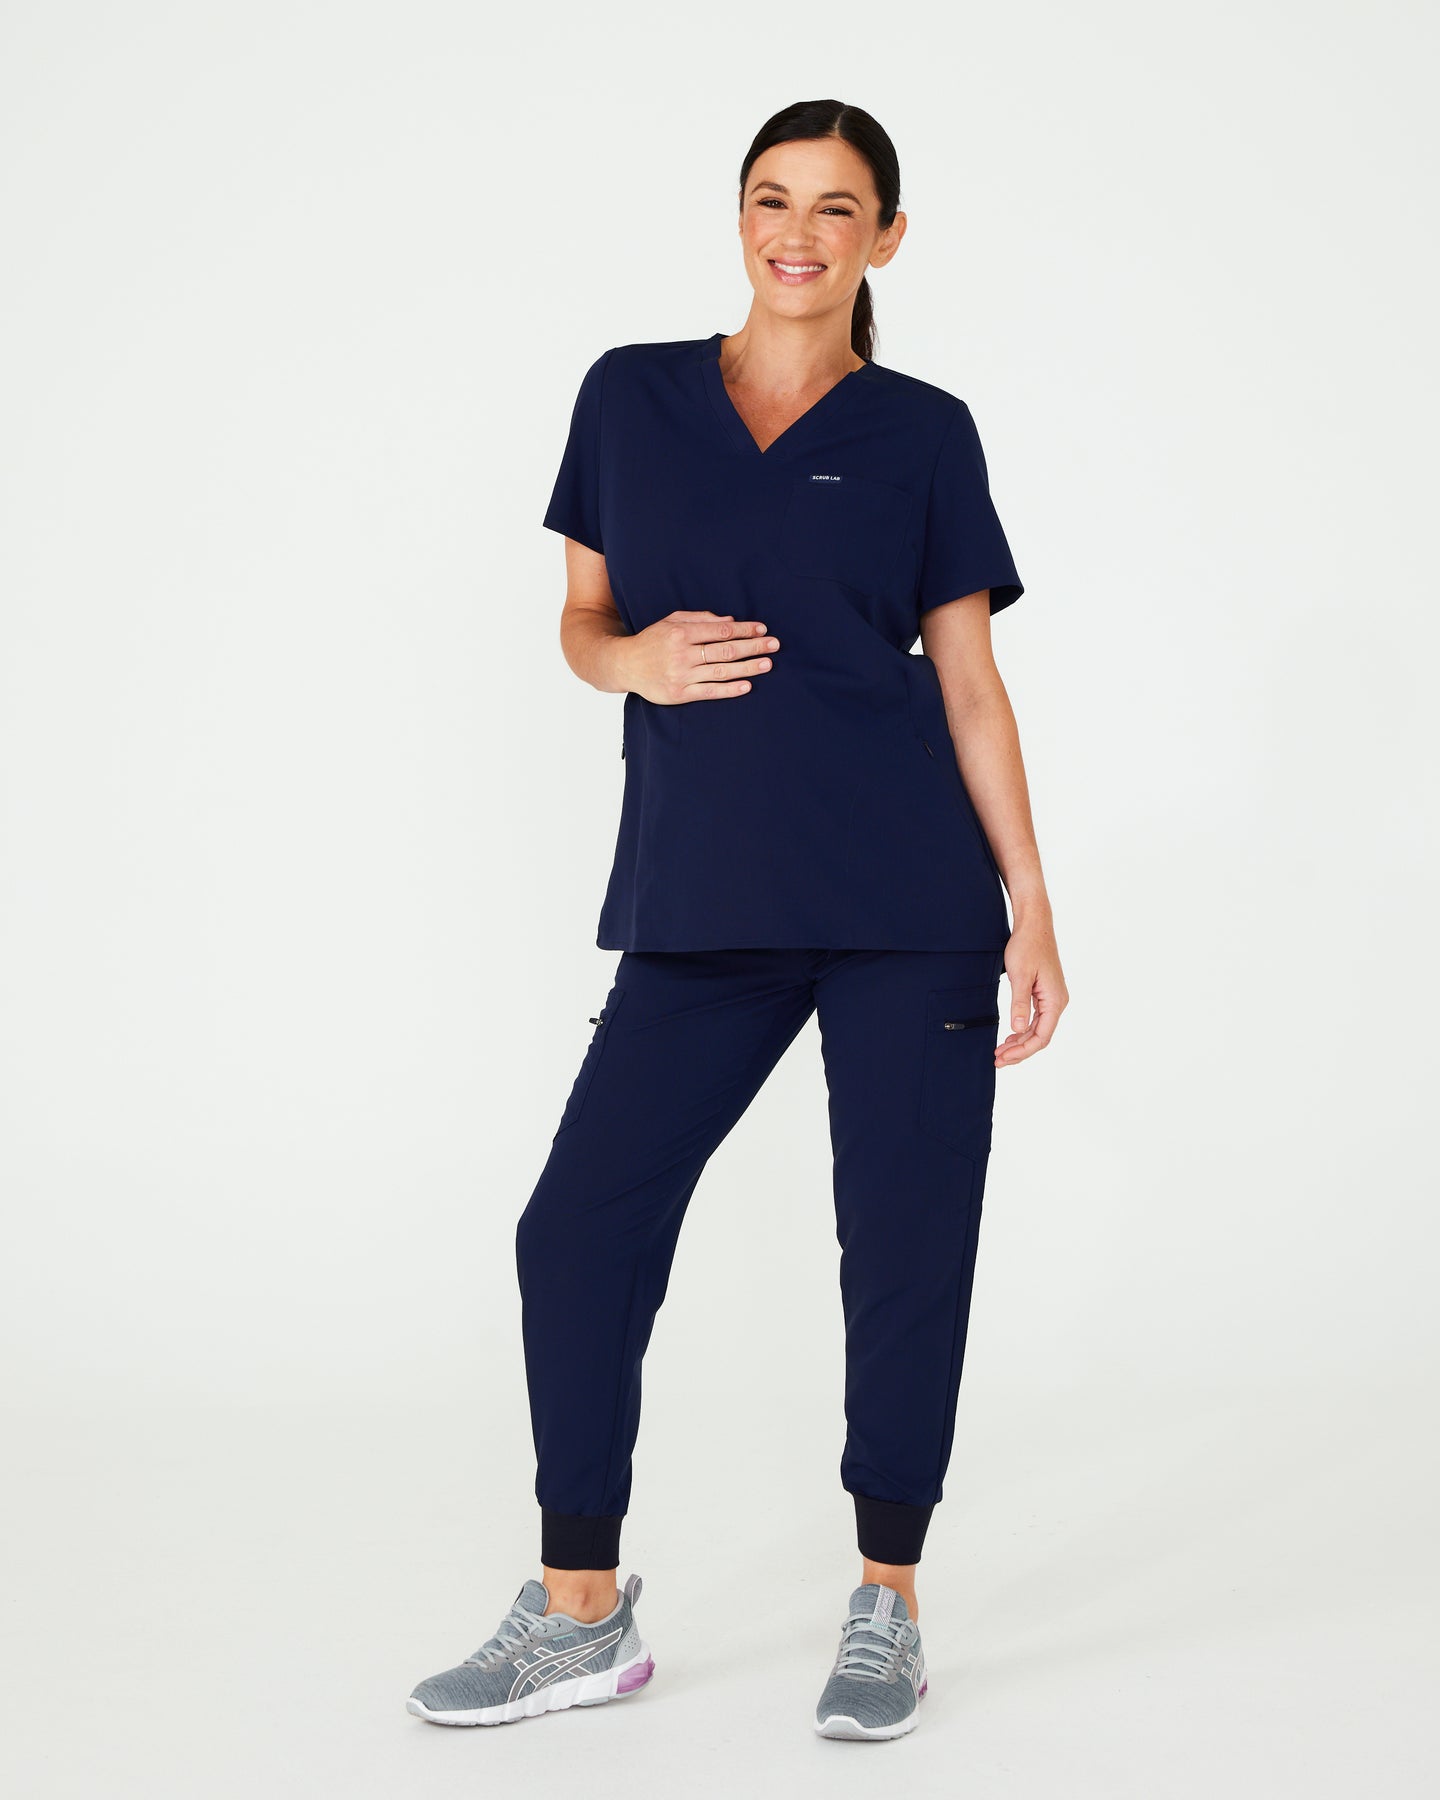 Ultra-Soft Scrubs and Nursing Uniforms for Women – Scrub Lab - Premium ...